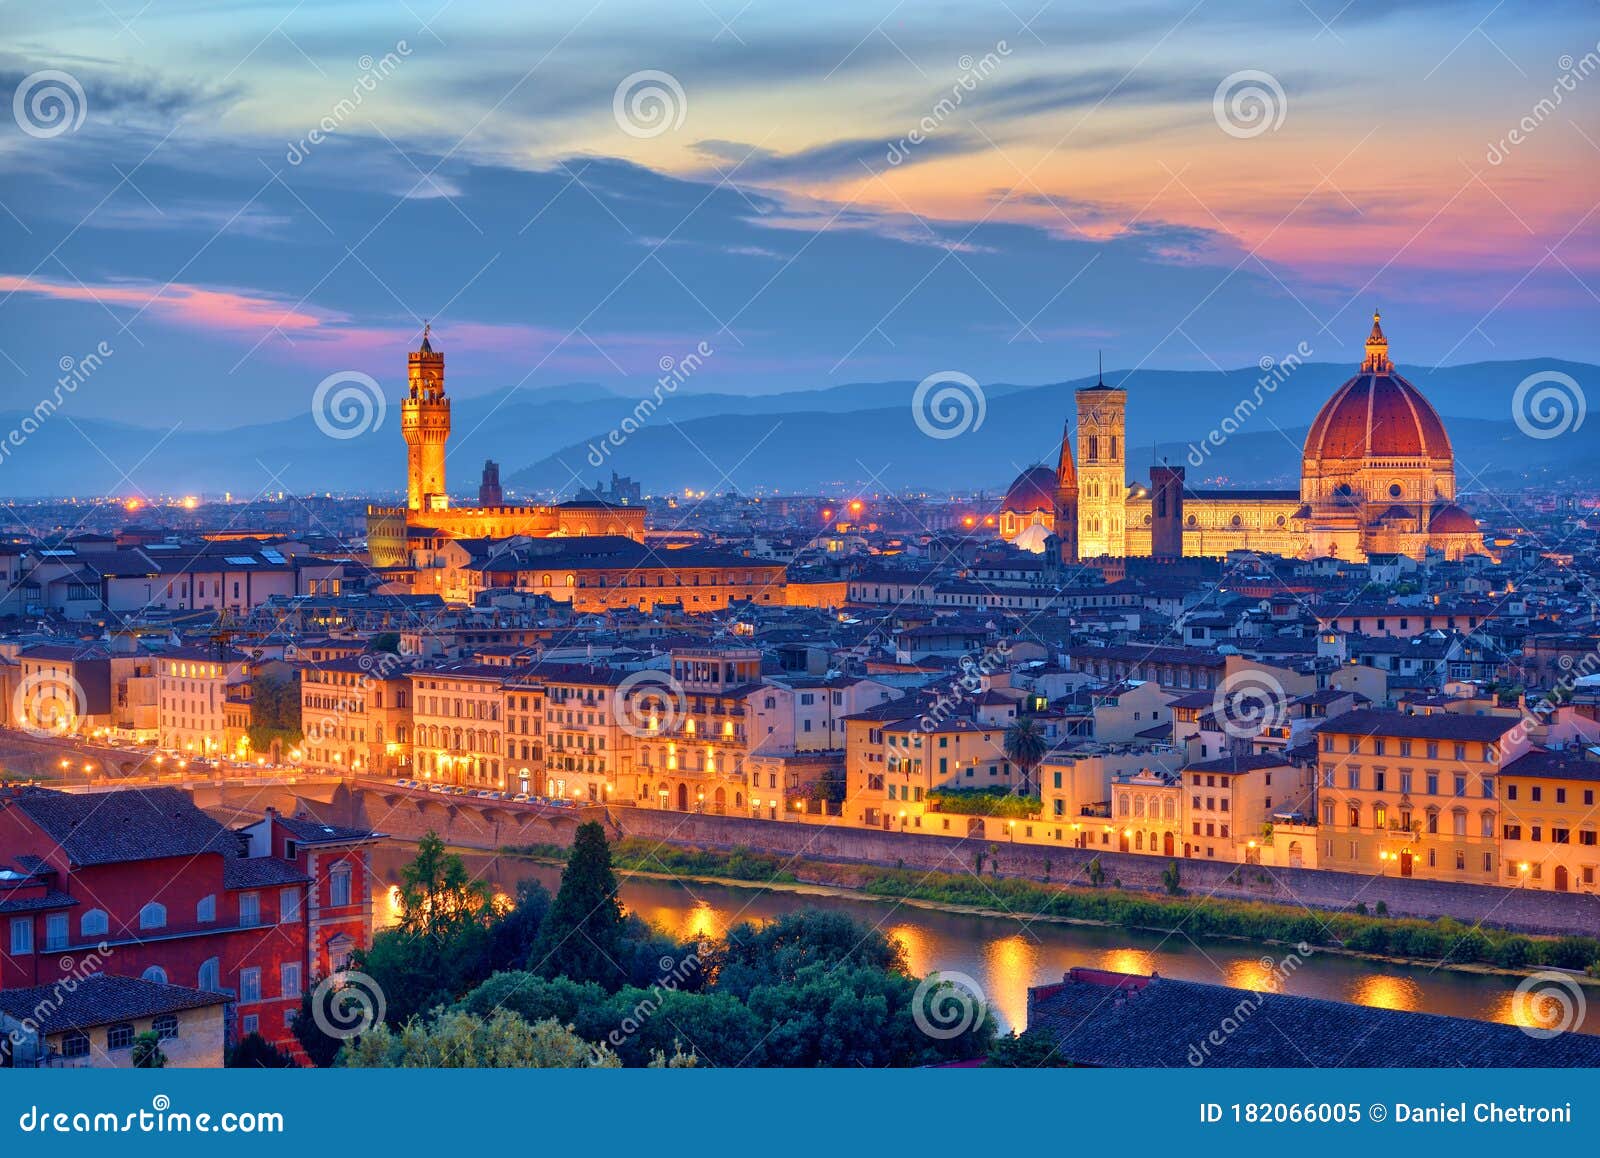 Maken toegang vacuüm Florence, Tuscany - Night Scenery with Duomo Santa Maria Del Fiori,  Renaissance Architecture in Italy Stock Image - Image of landmark, city:  182066005